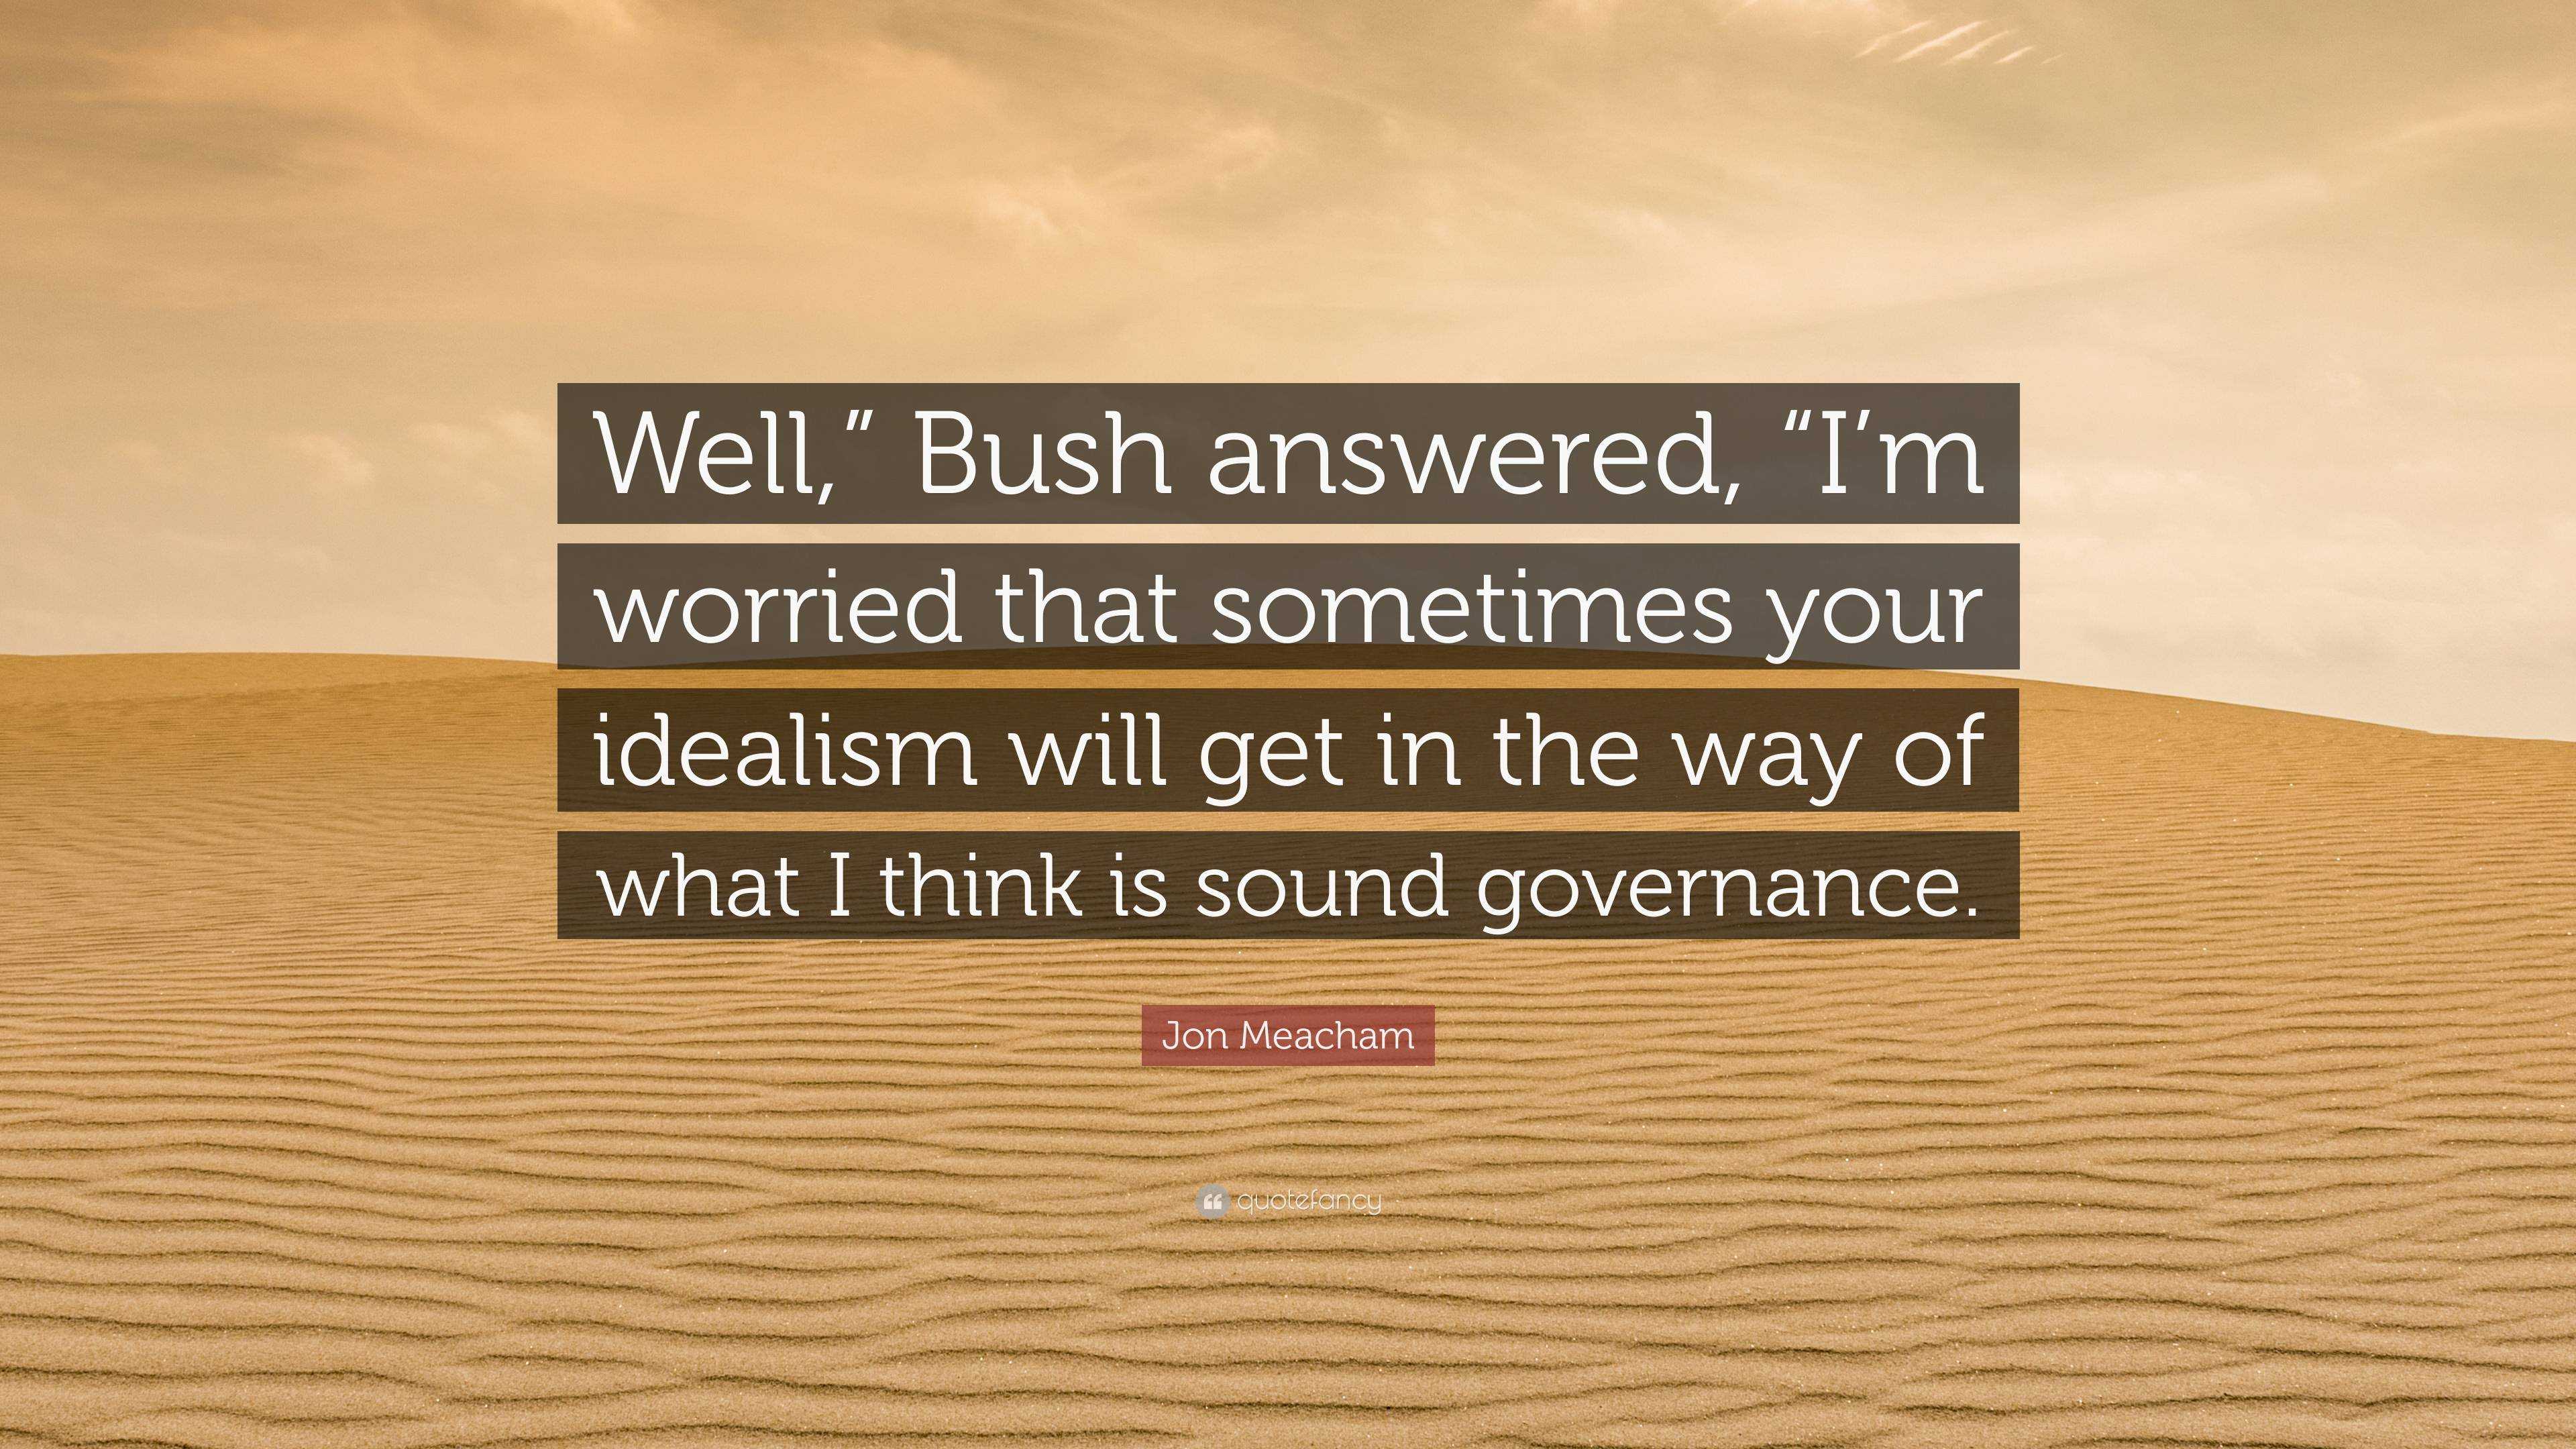 Jon Meacham Quote: “Well,” Bush answered, “I'm worried that